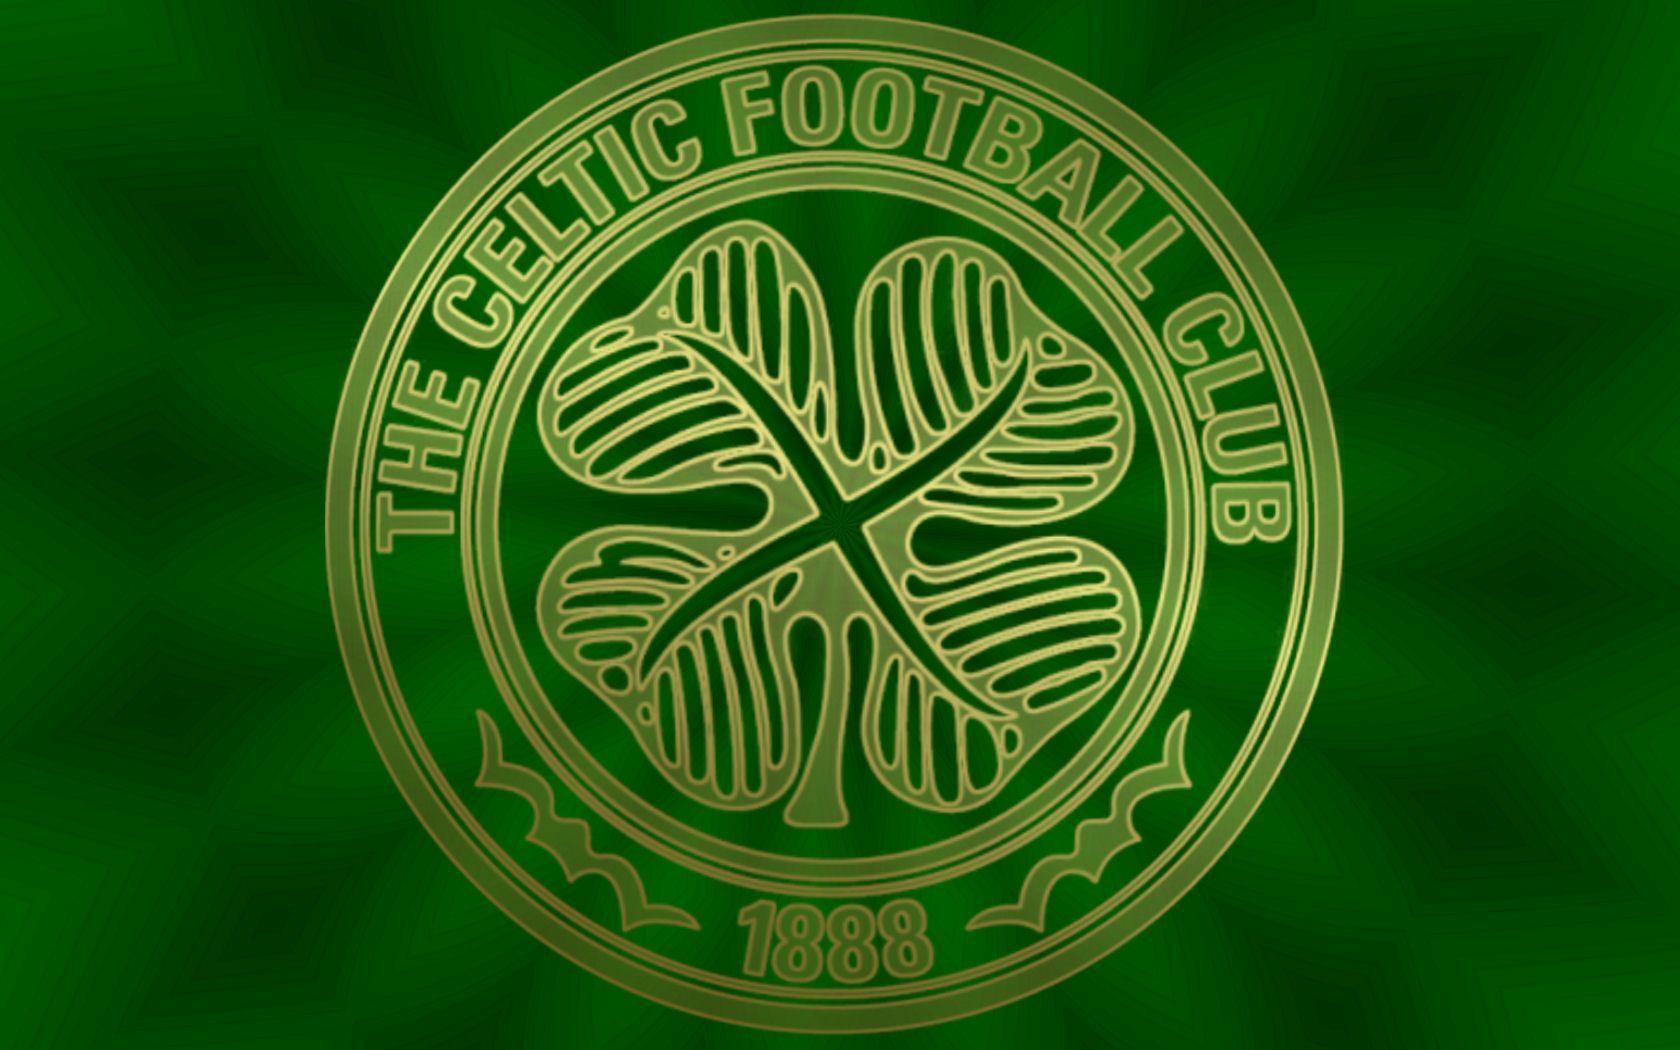 Celtic Fc Pictures 92